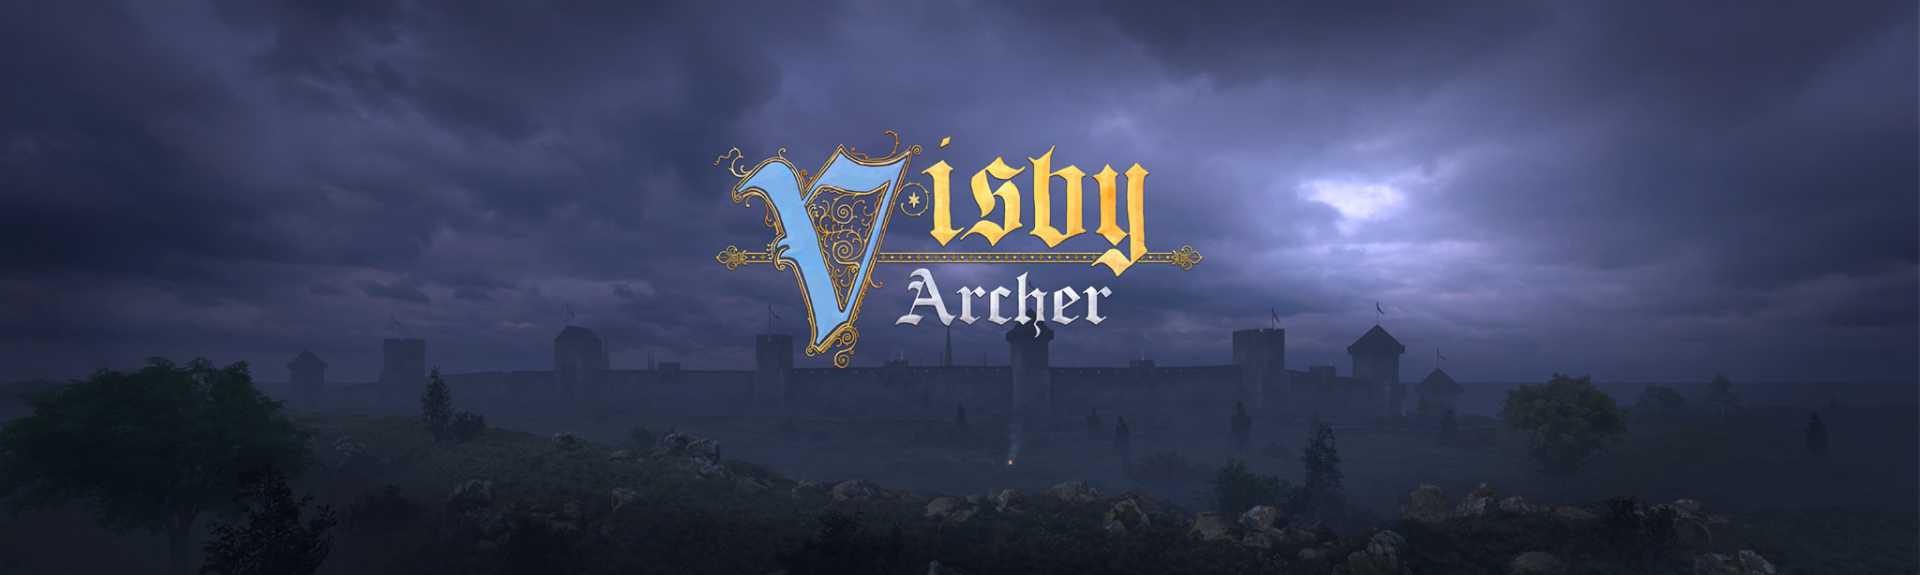 Visby Archer